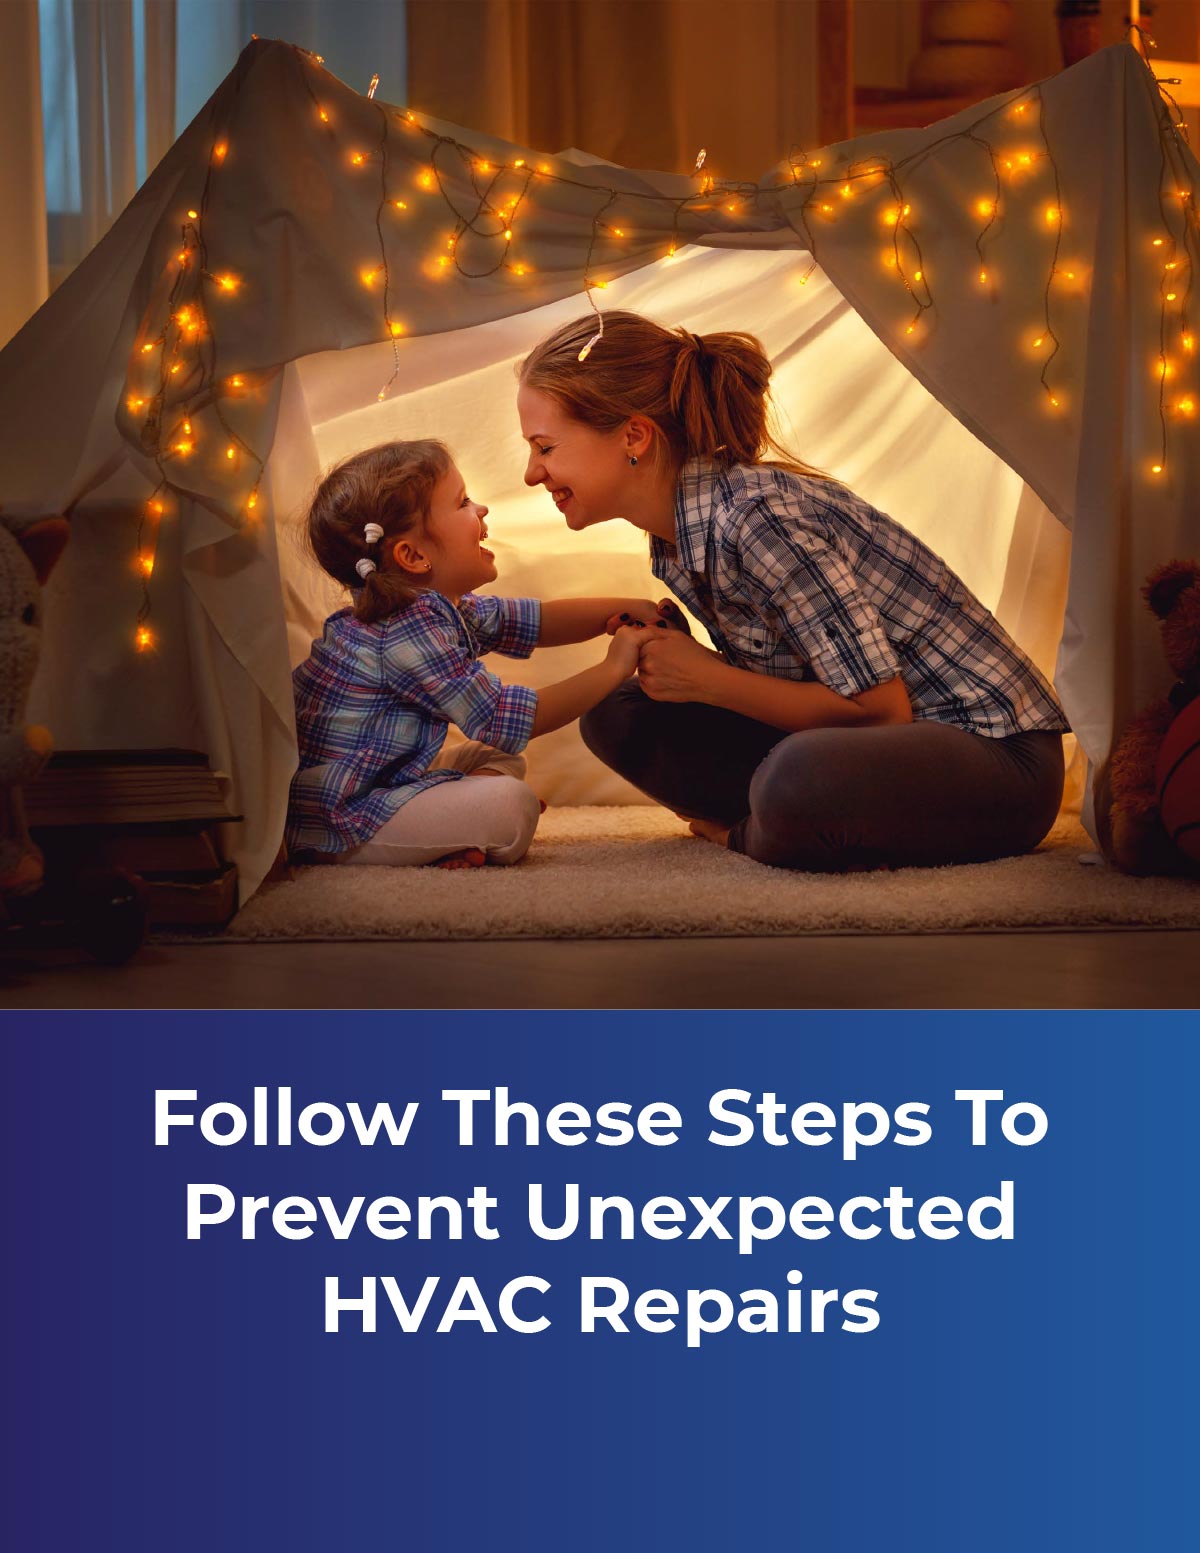 How To Prevent Unexpected HVAC Repairs